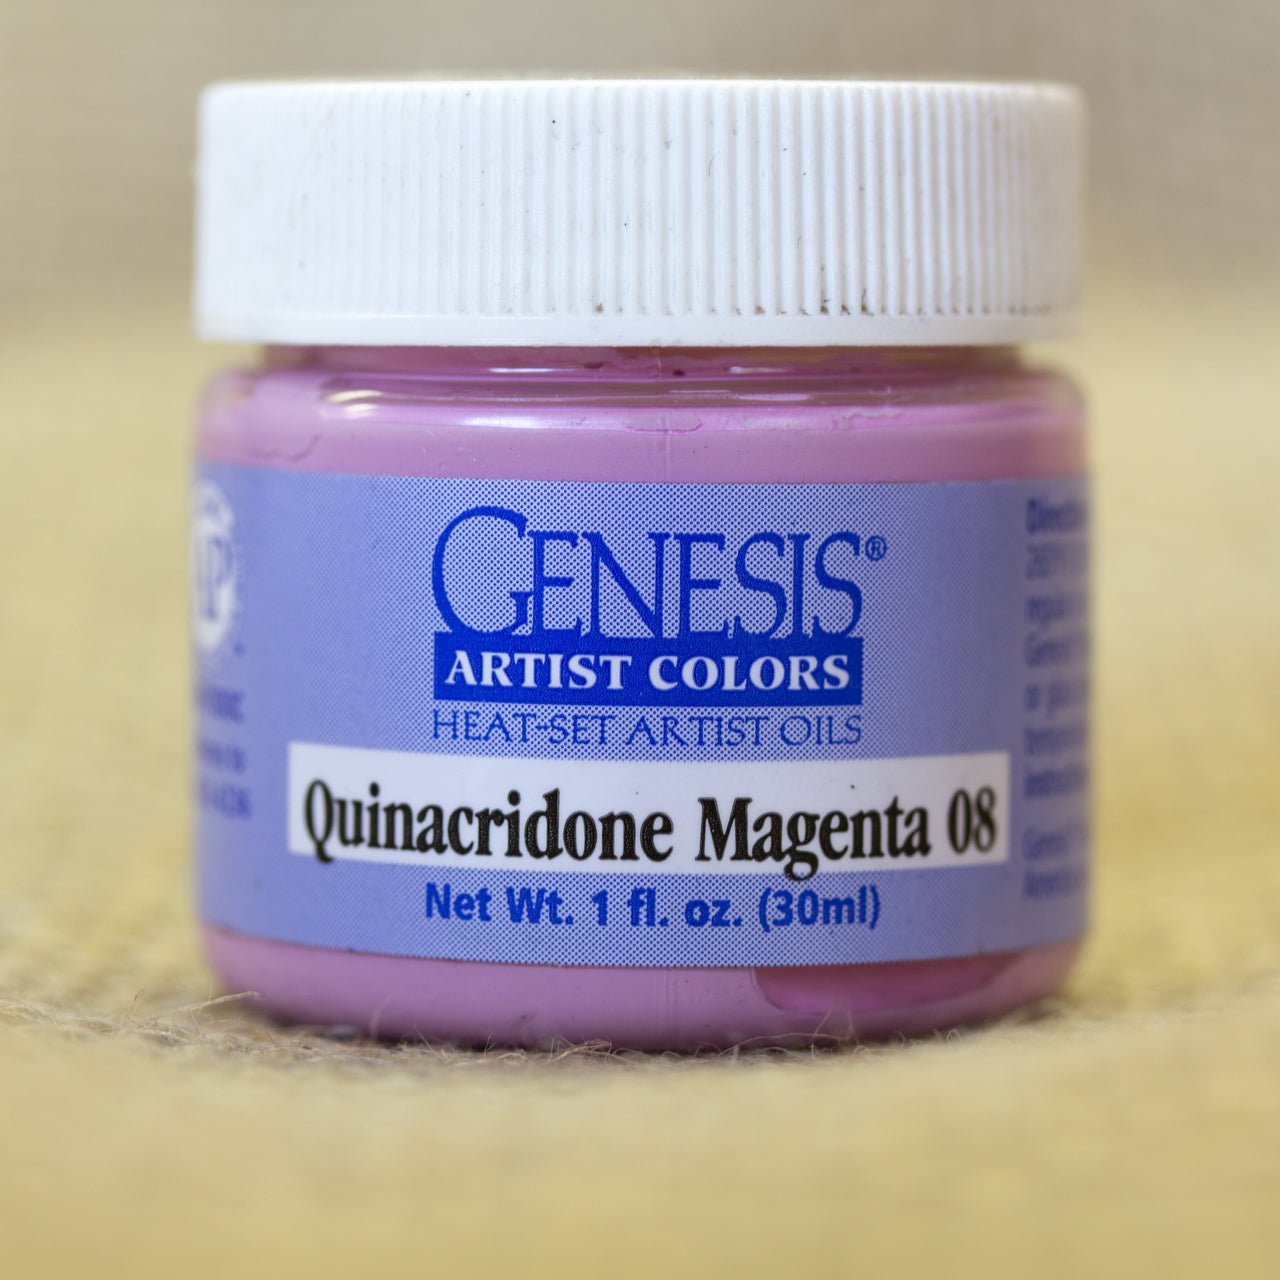 Genesis Heat Set Paint - Quinacridone Magenta 08 - 1oz - Create A Little Magic (Pty) Ltd